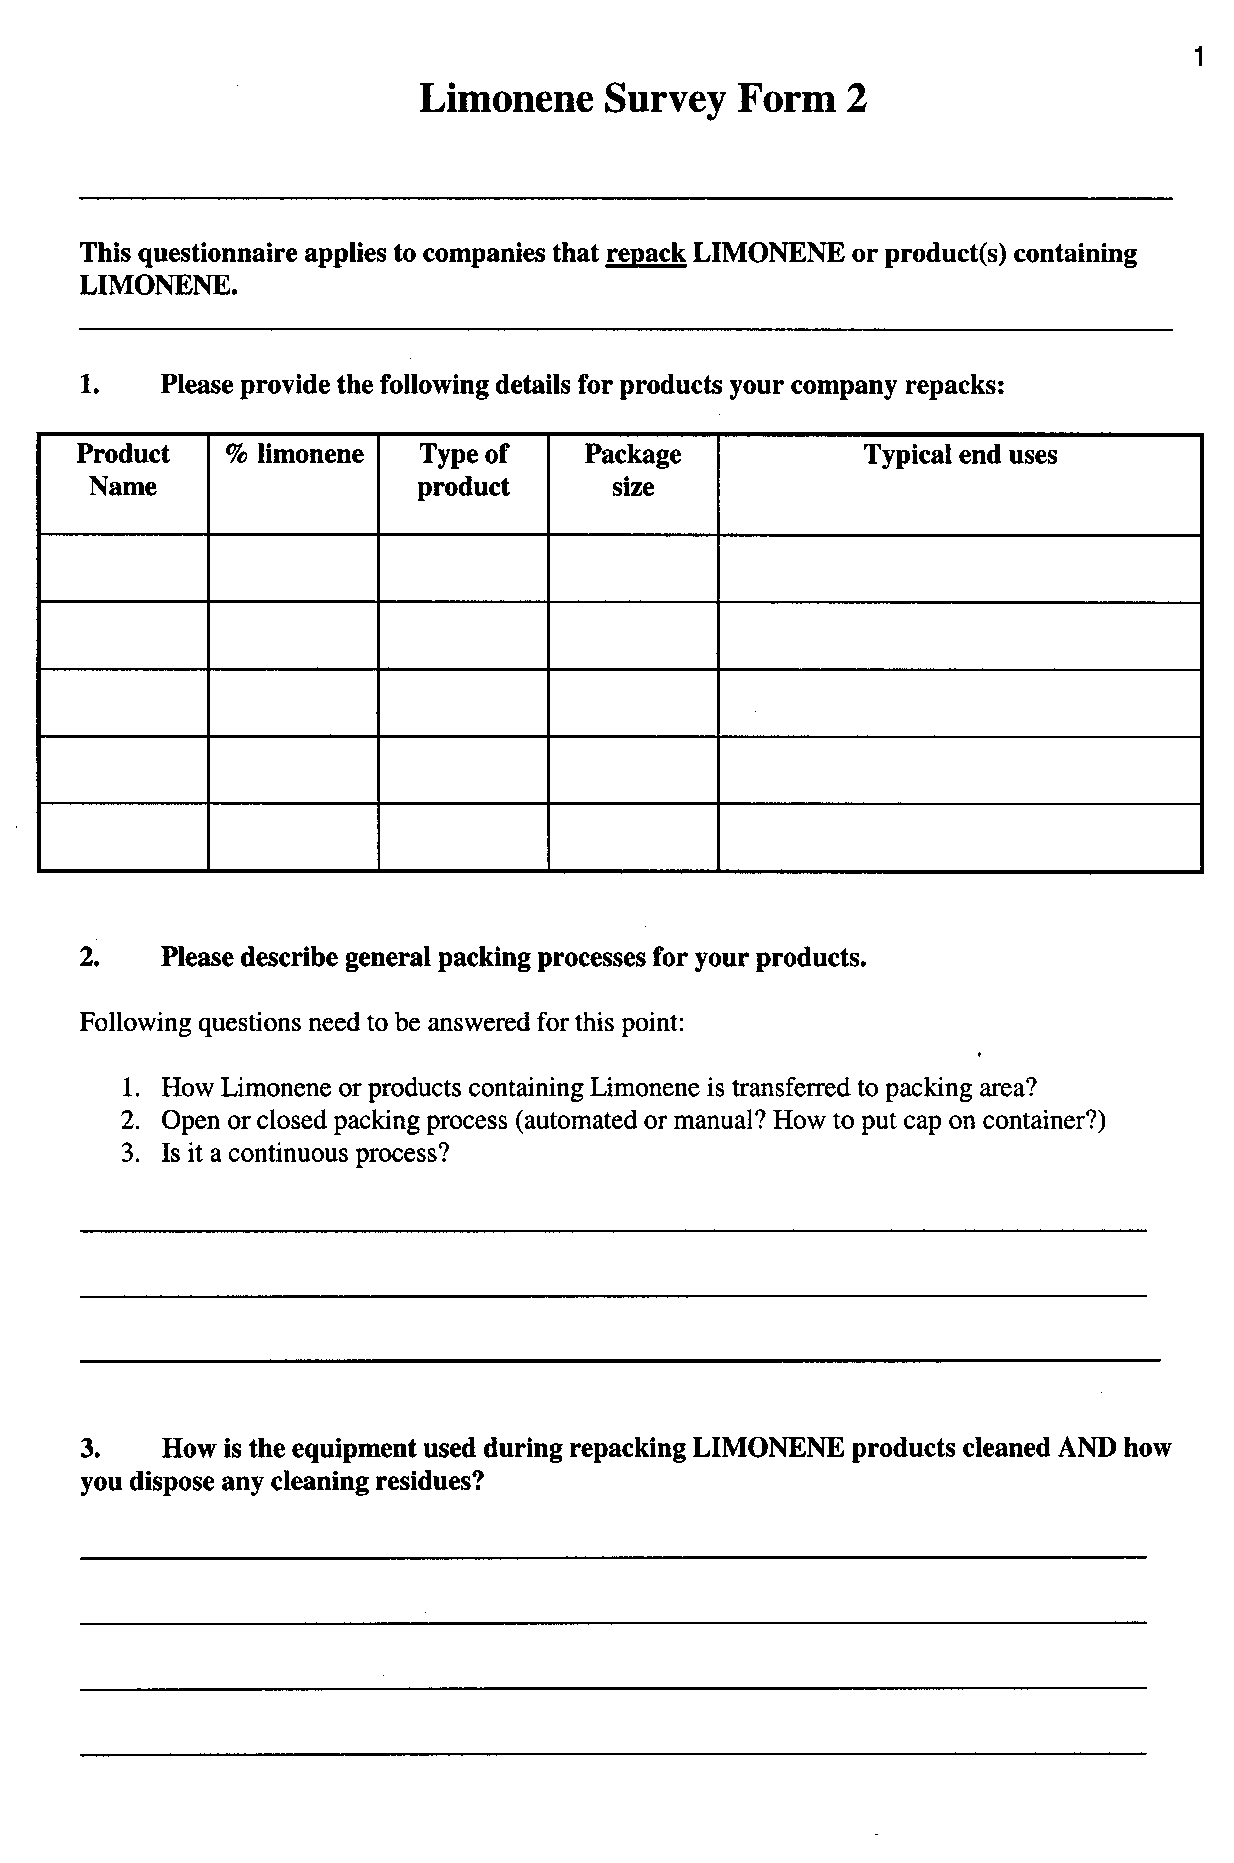 2nd page survey